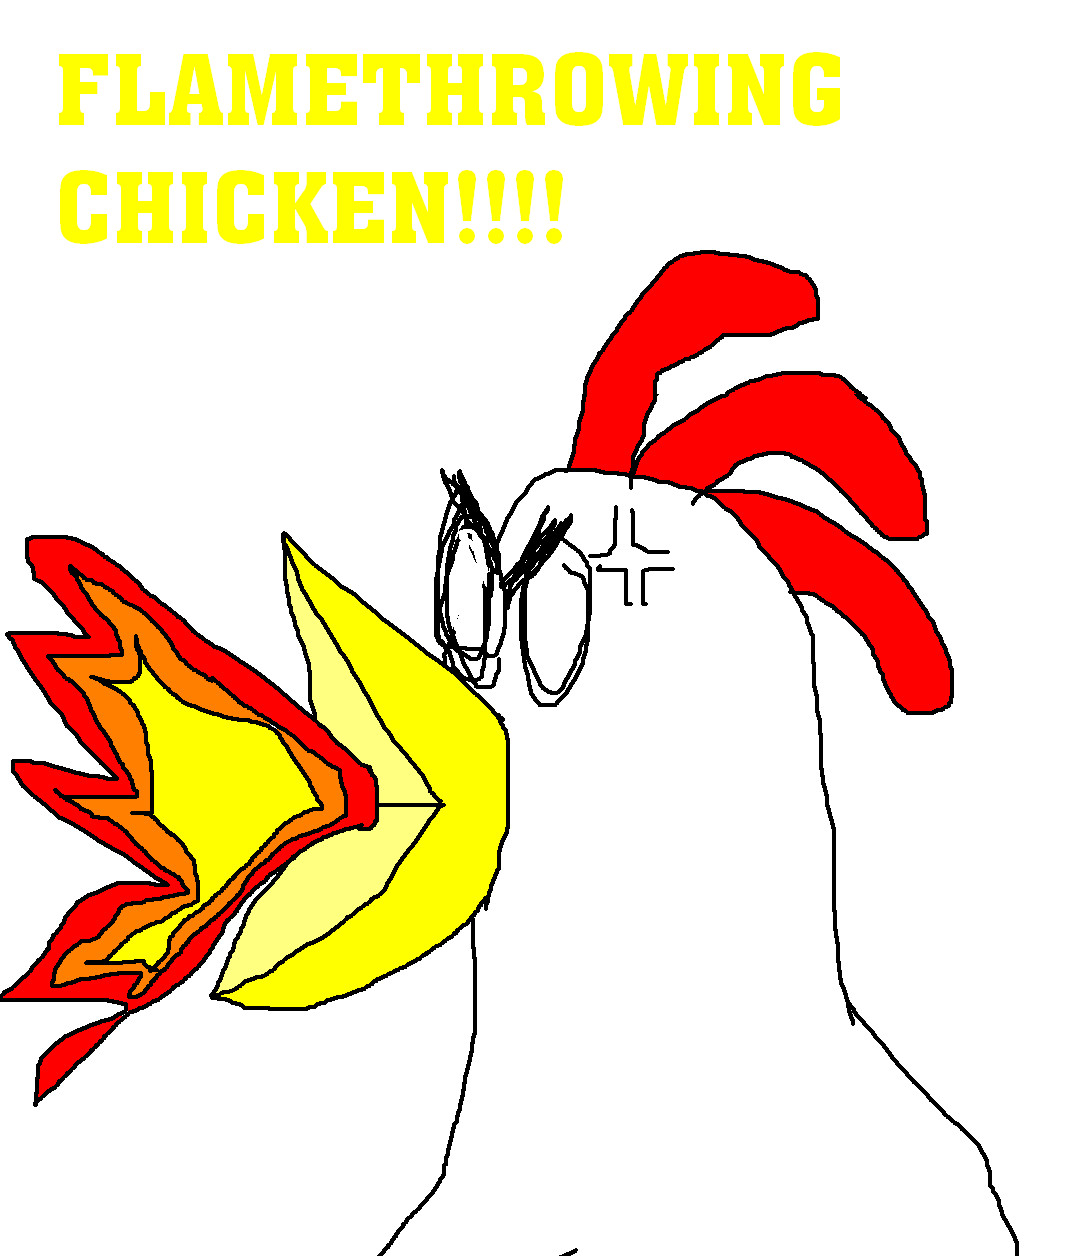 flamethrowing chicken!!! by Almecha